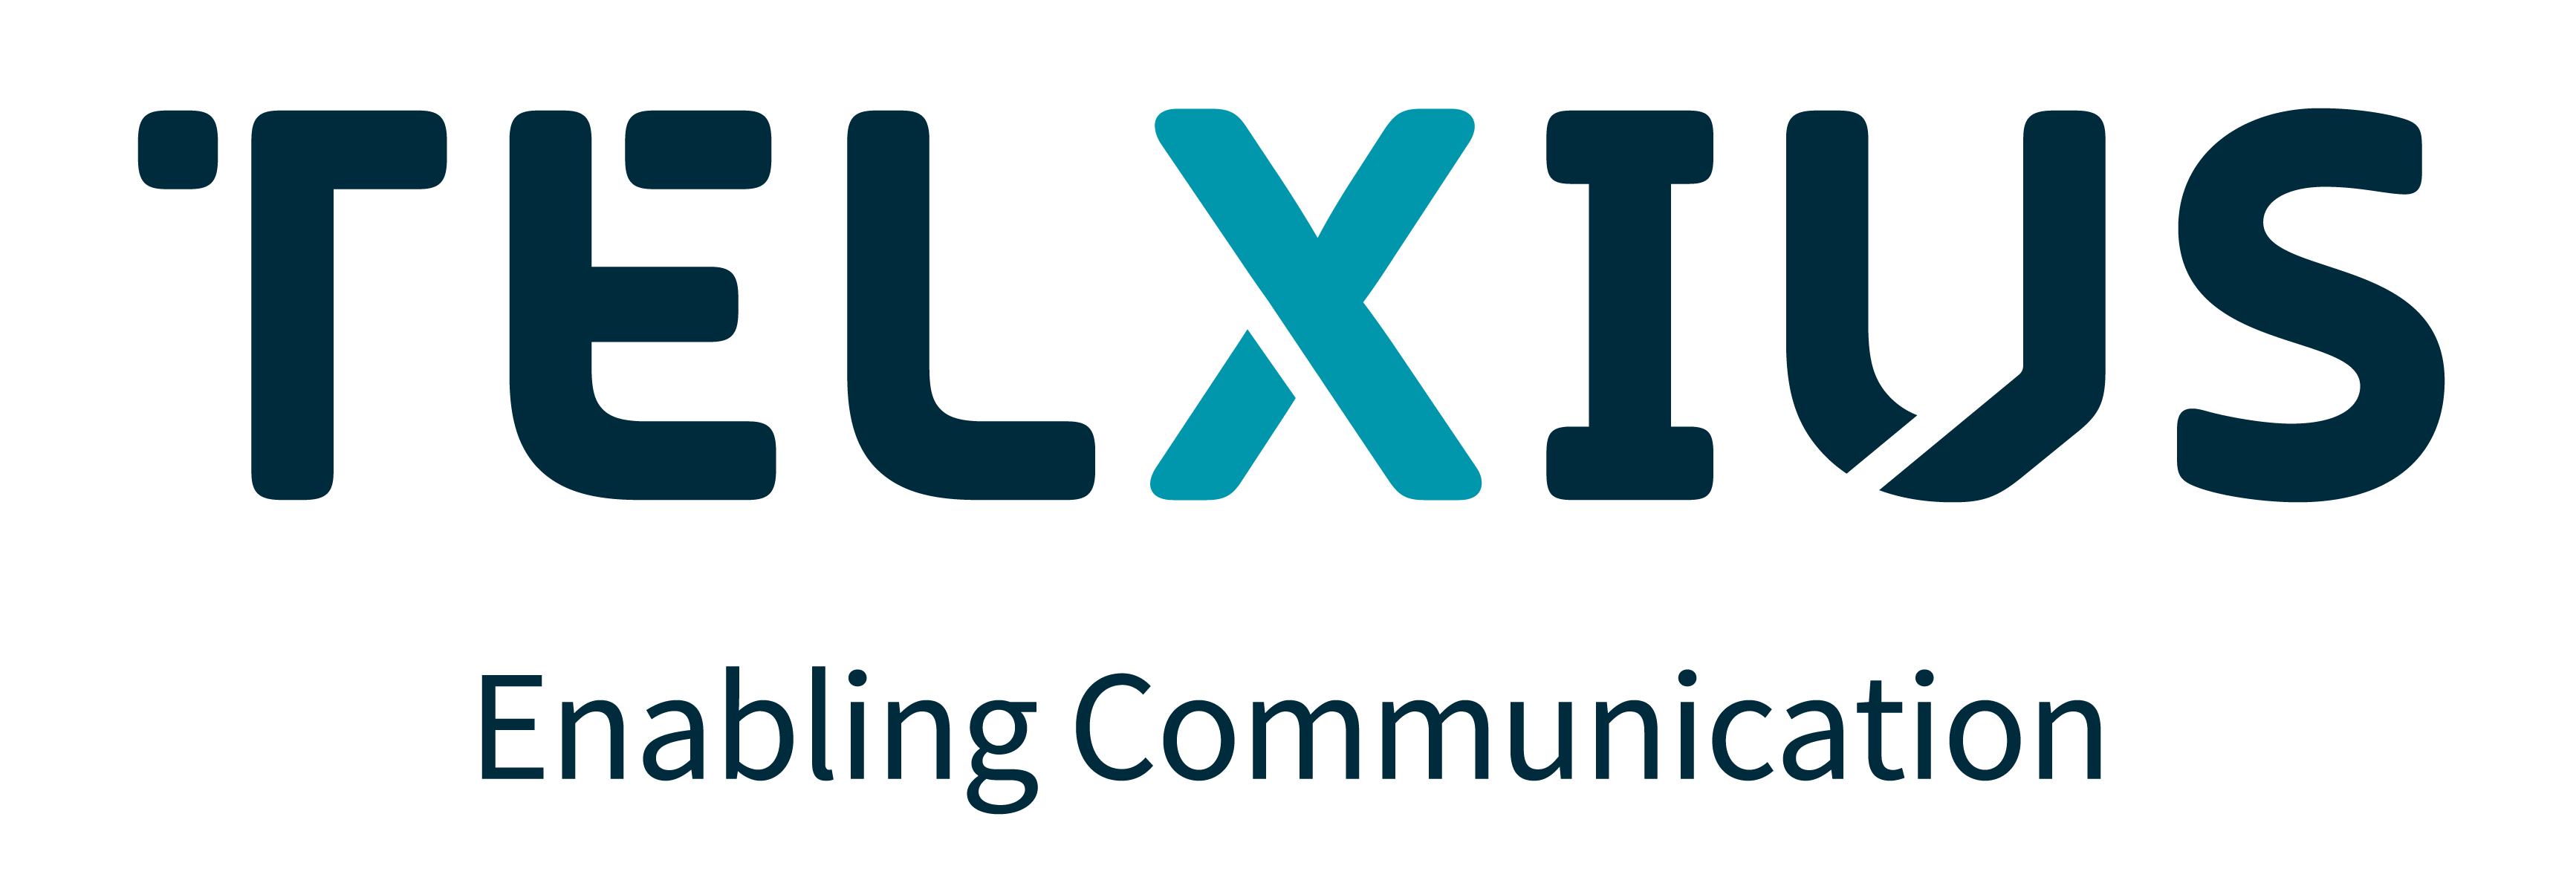 Provider logo for Telxius Cable Espana